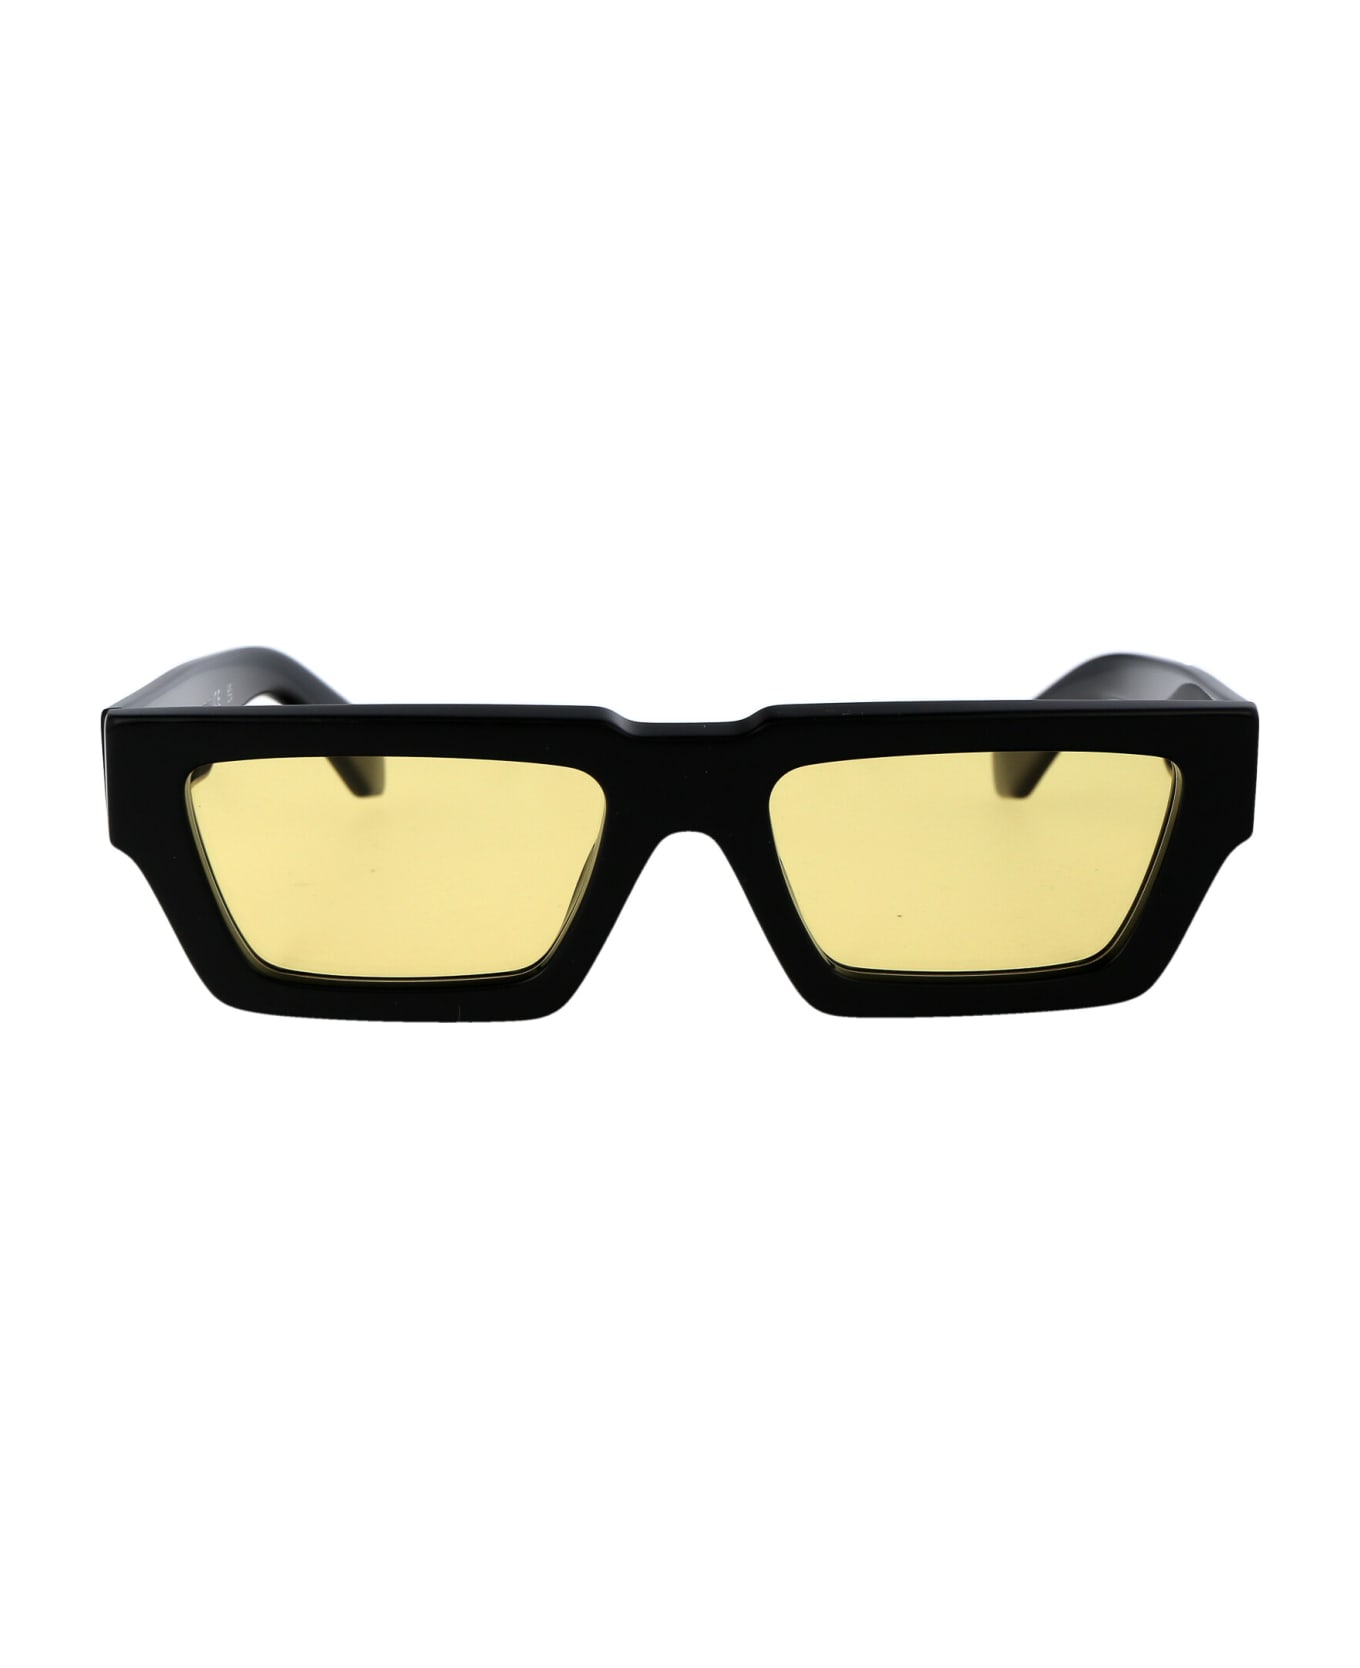 Off-White Manchester Sunglasses - 1018 BLACK